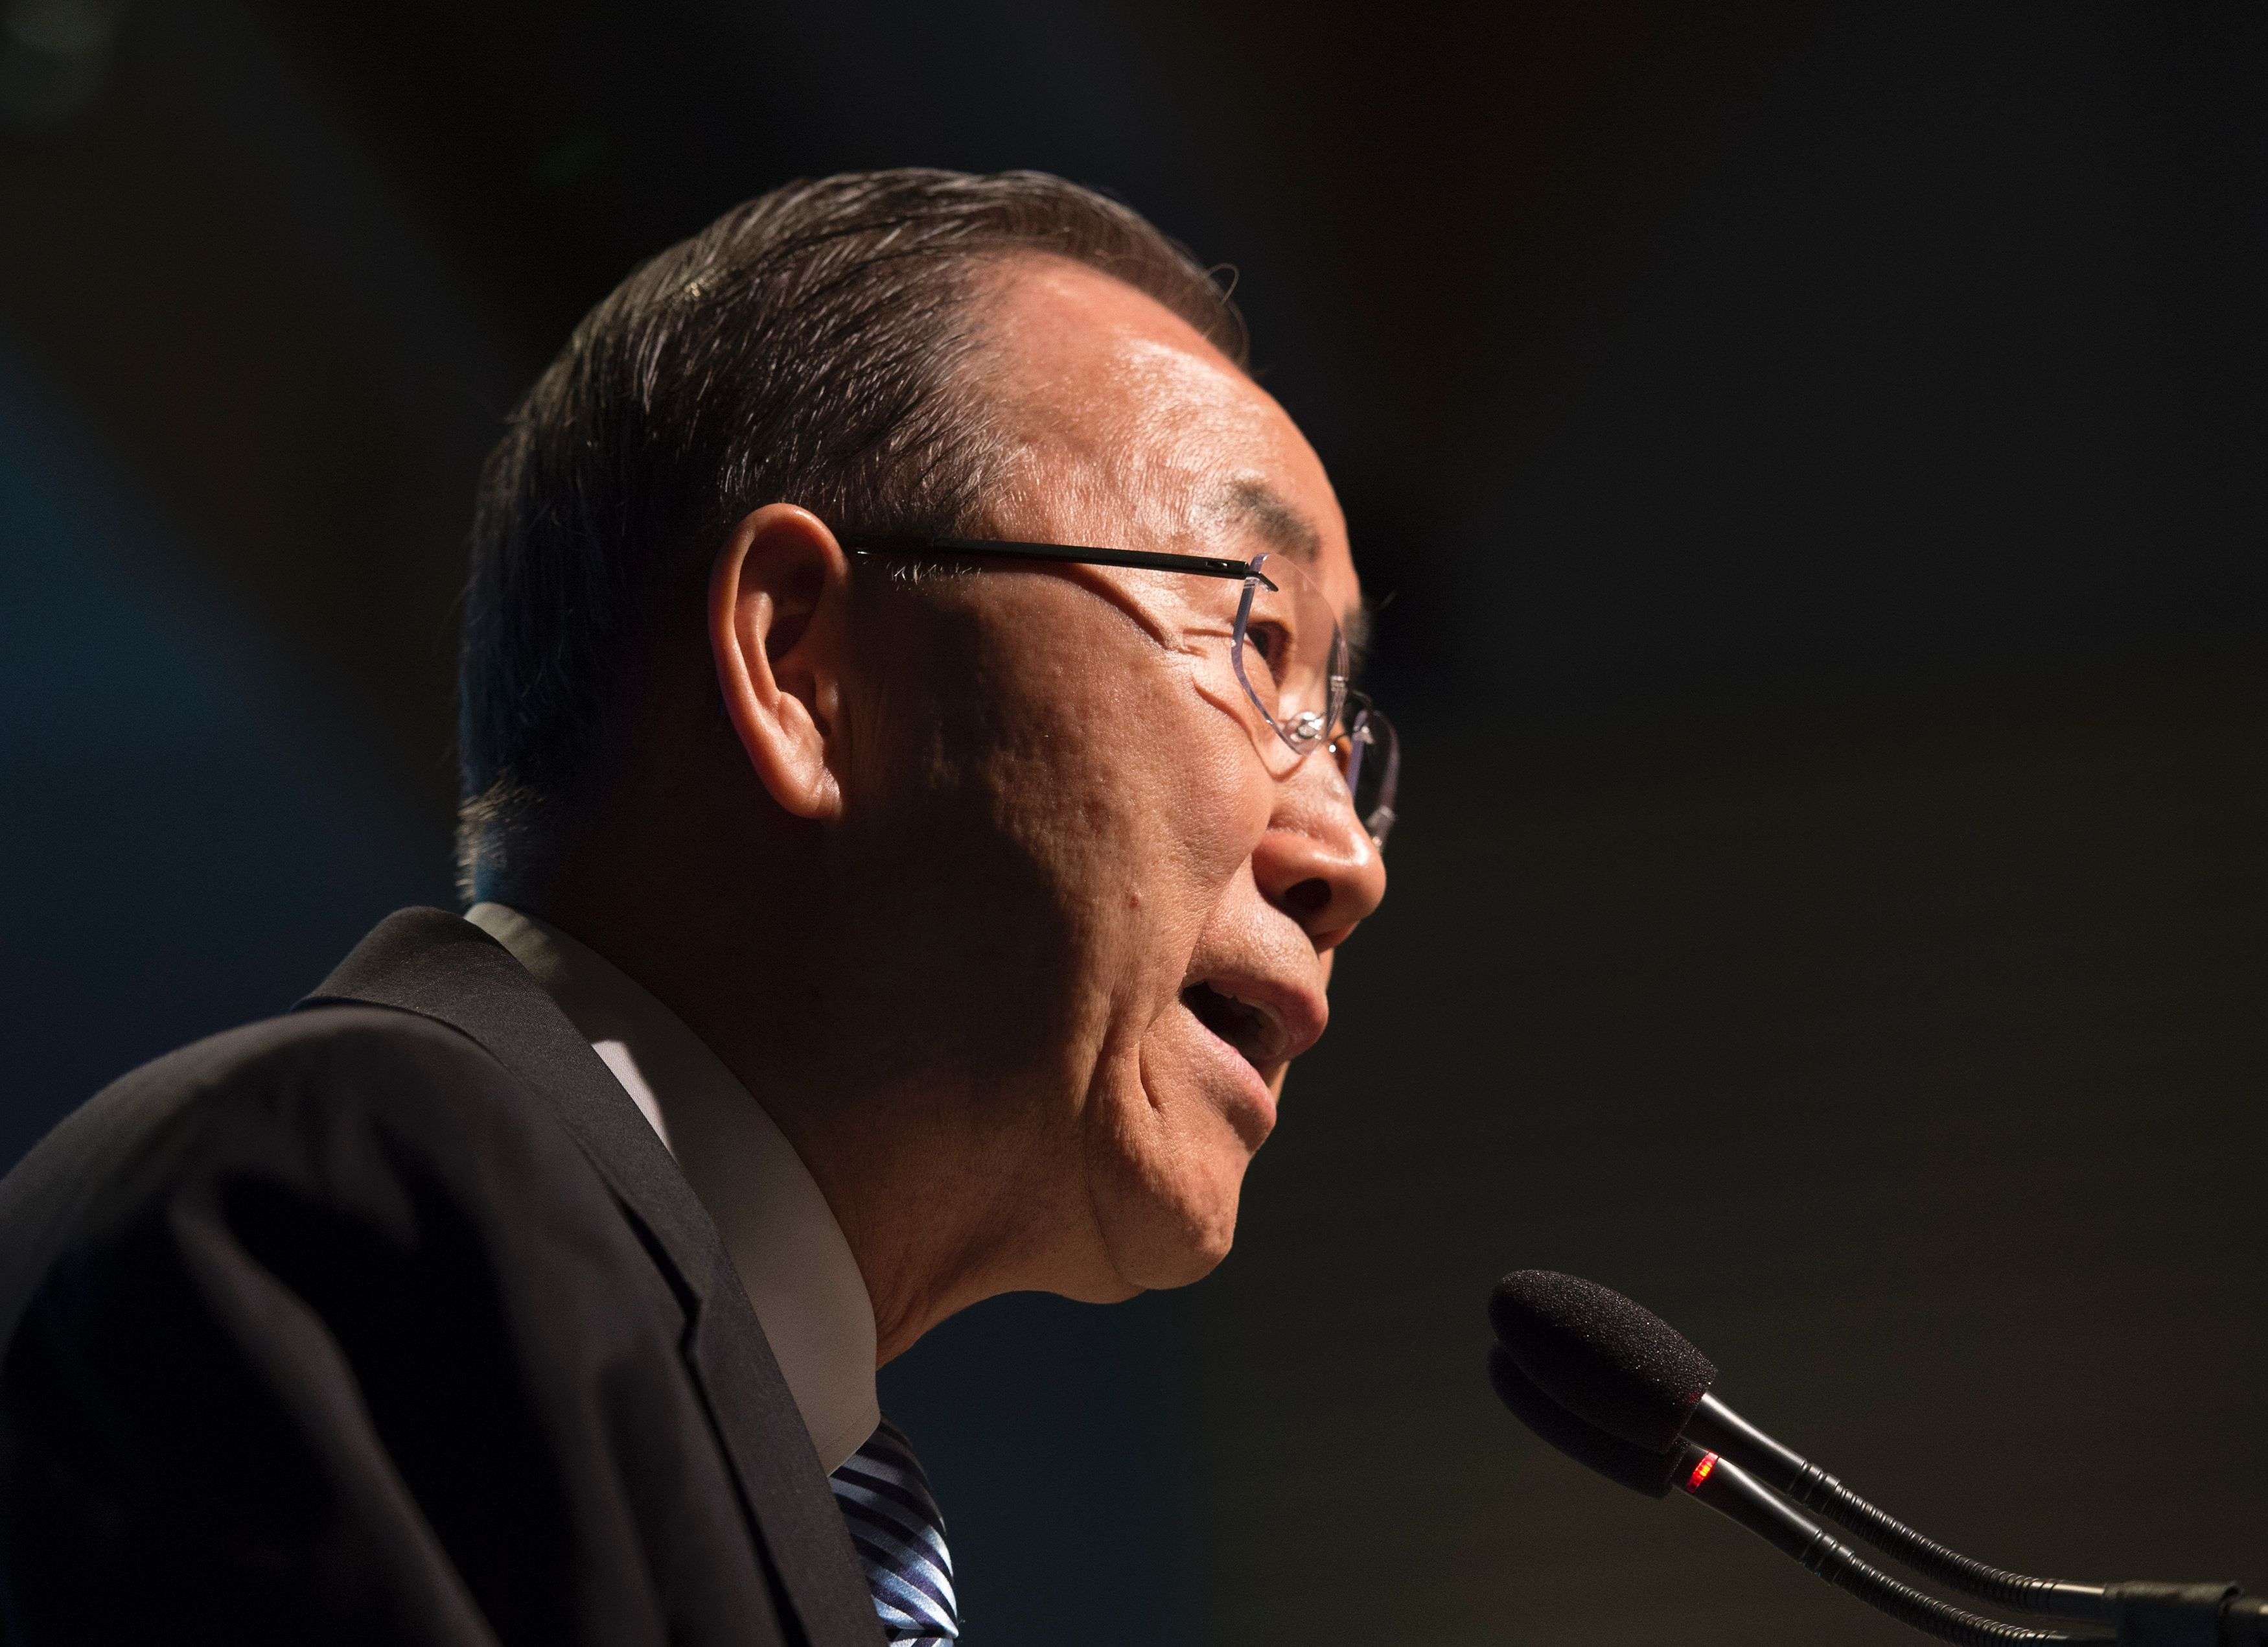 Former UN secretary general Ban Ki-moon. Photo: AFP